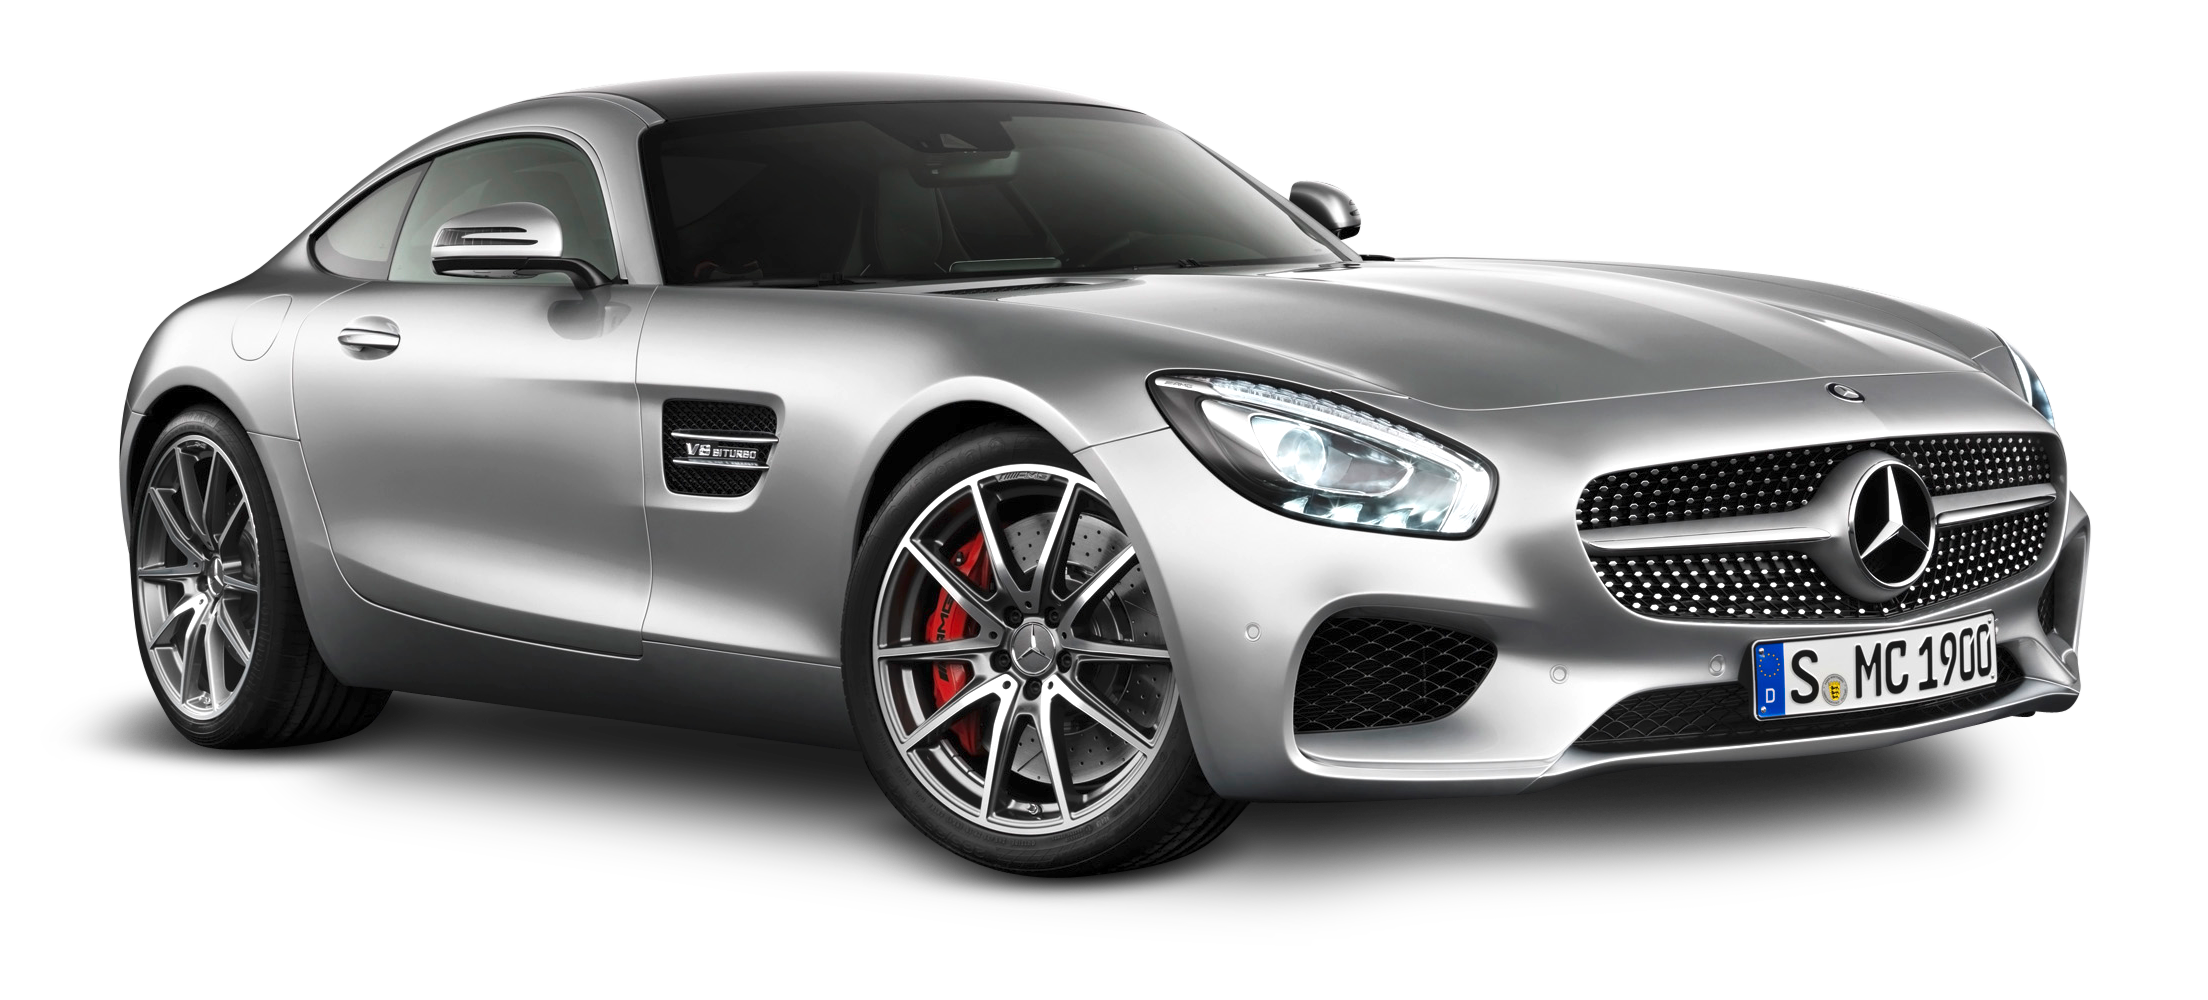 Mercedes Amg Gt Luxury Car Png Image Purepng Free Transparent Cc0